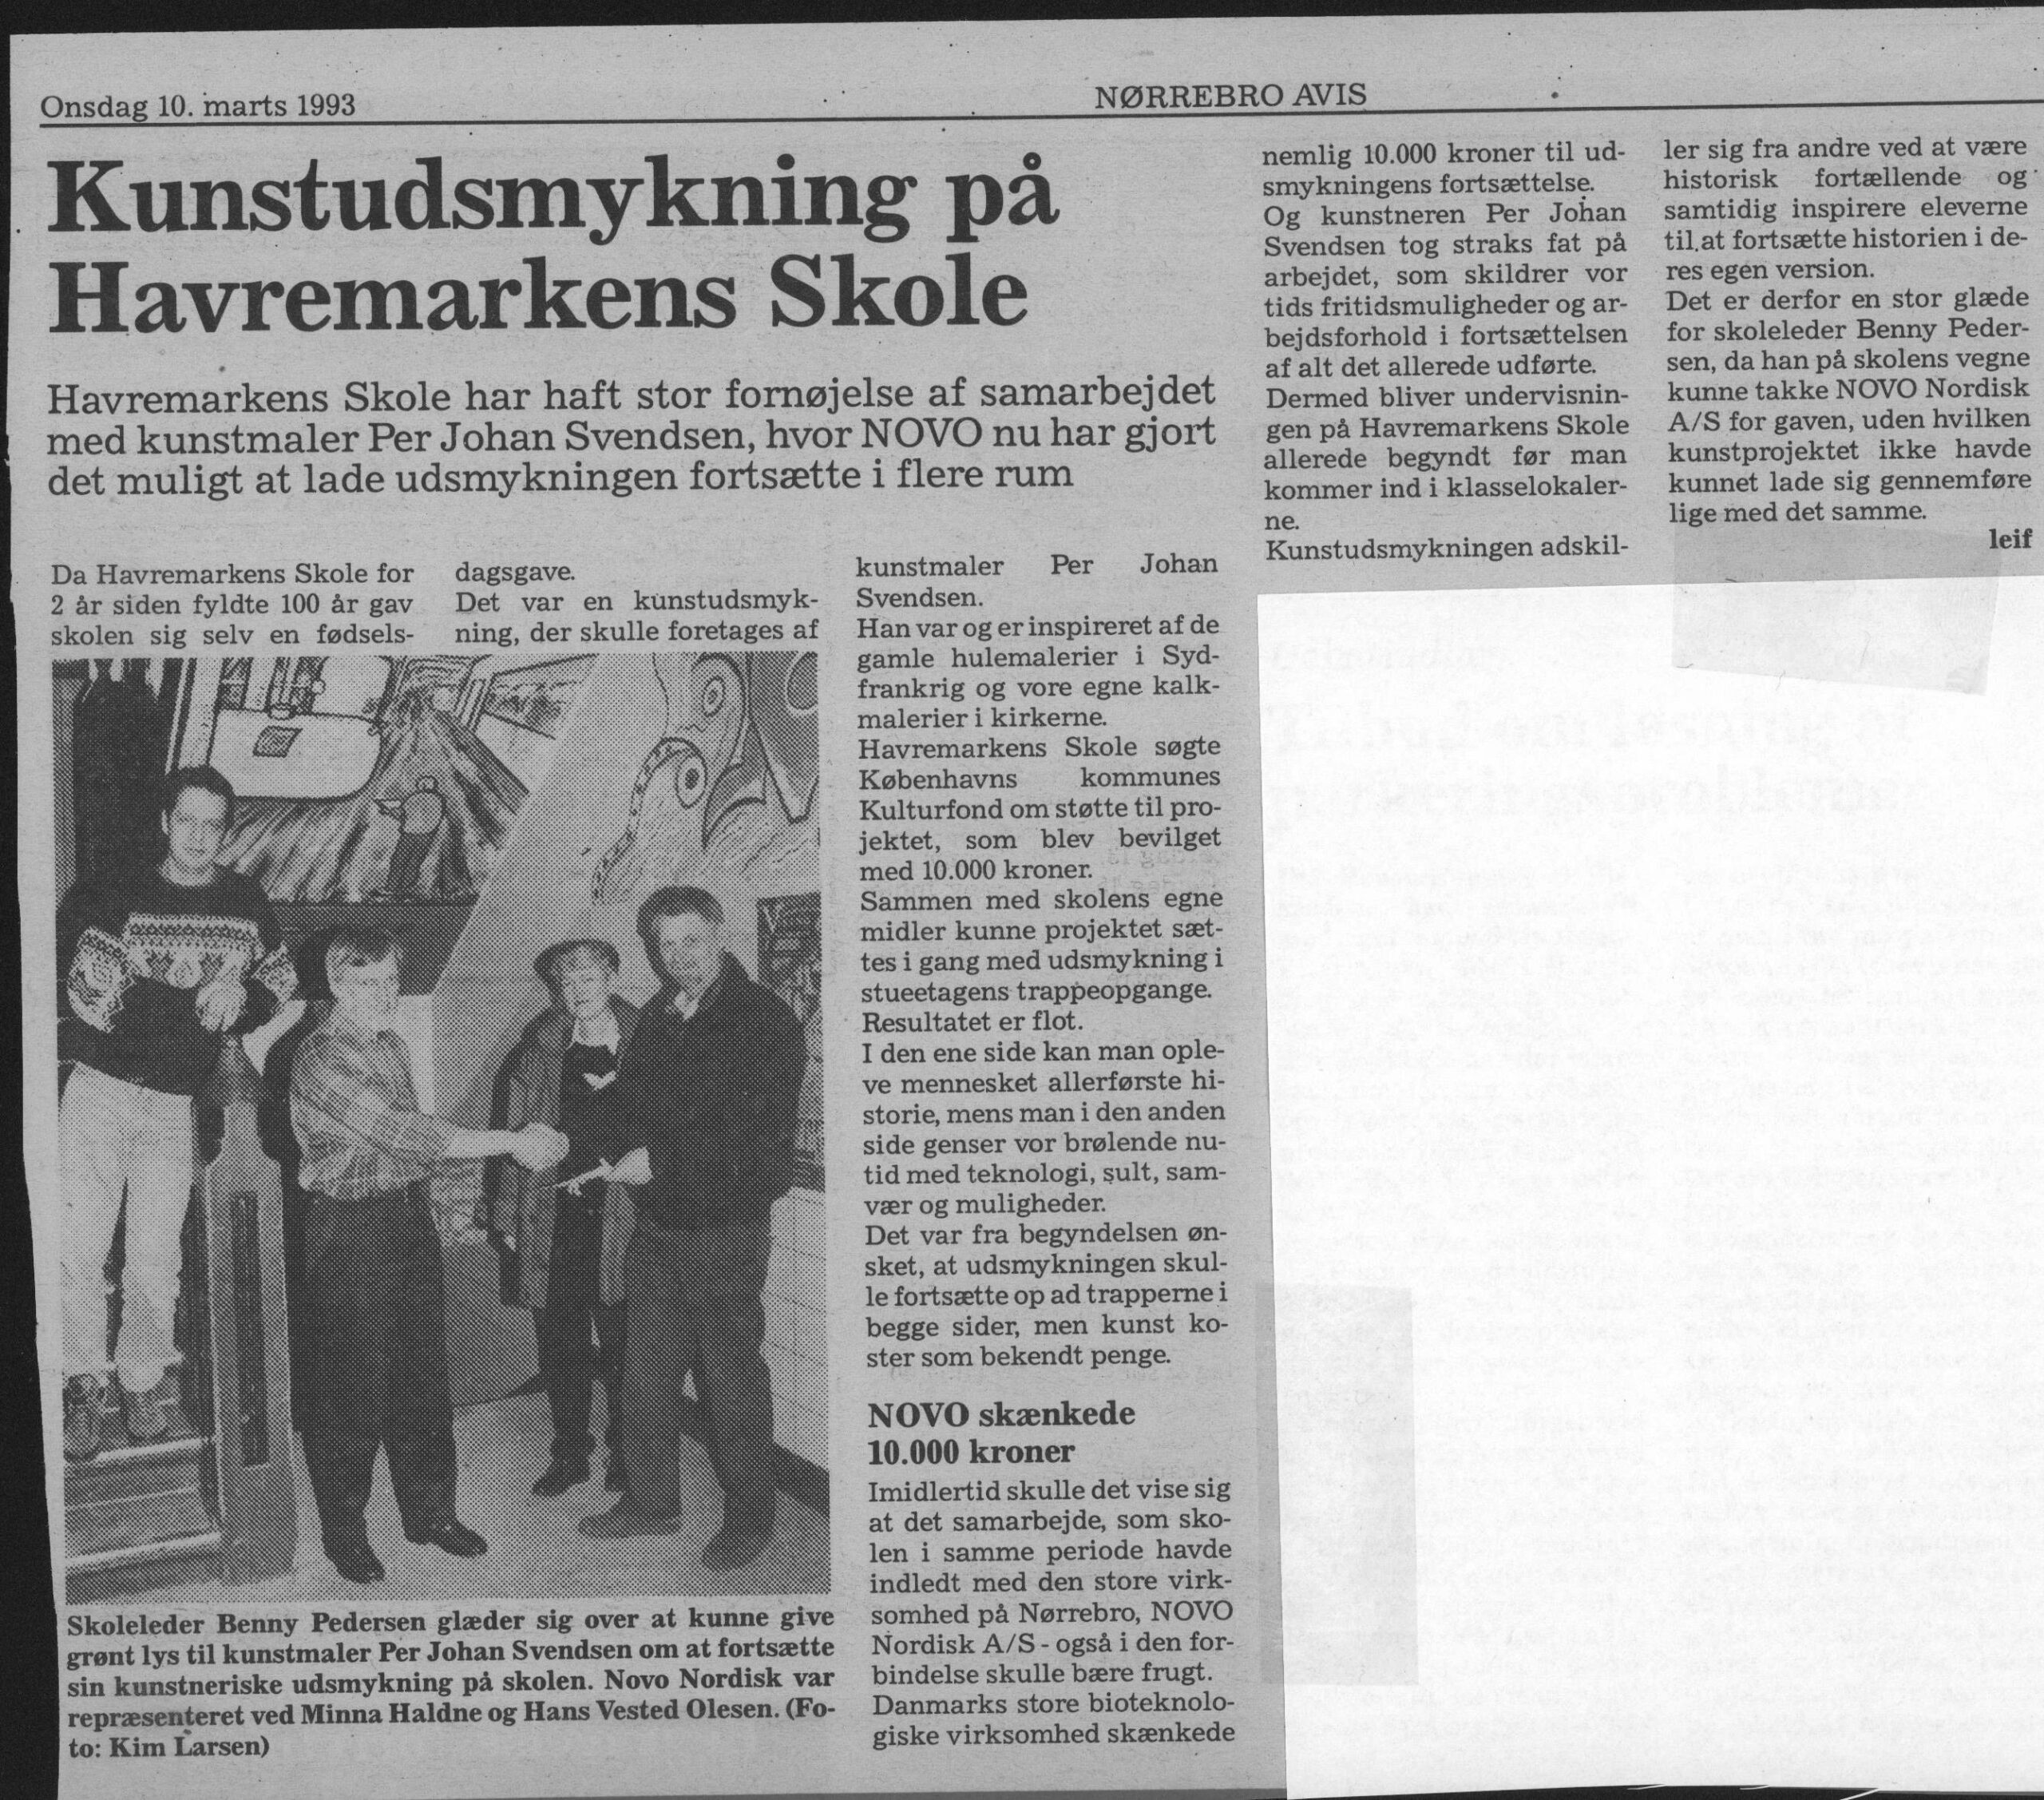 Kunstudsmykning på Havremarkens Skole. Omtale (En go Historie. Havremarkens Skole, København 1993). Leif. Nørrebro Avis.